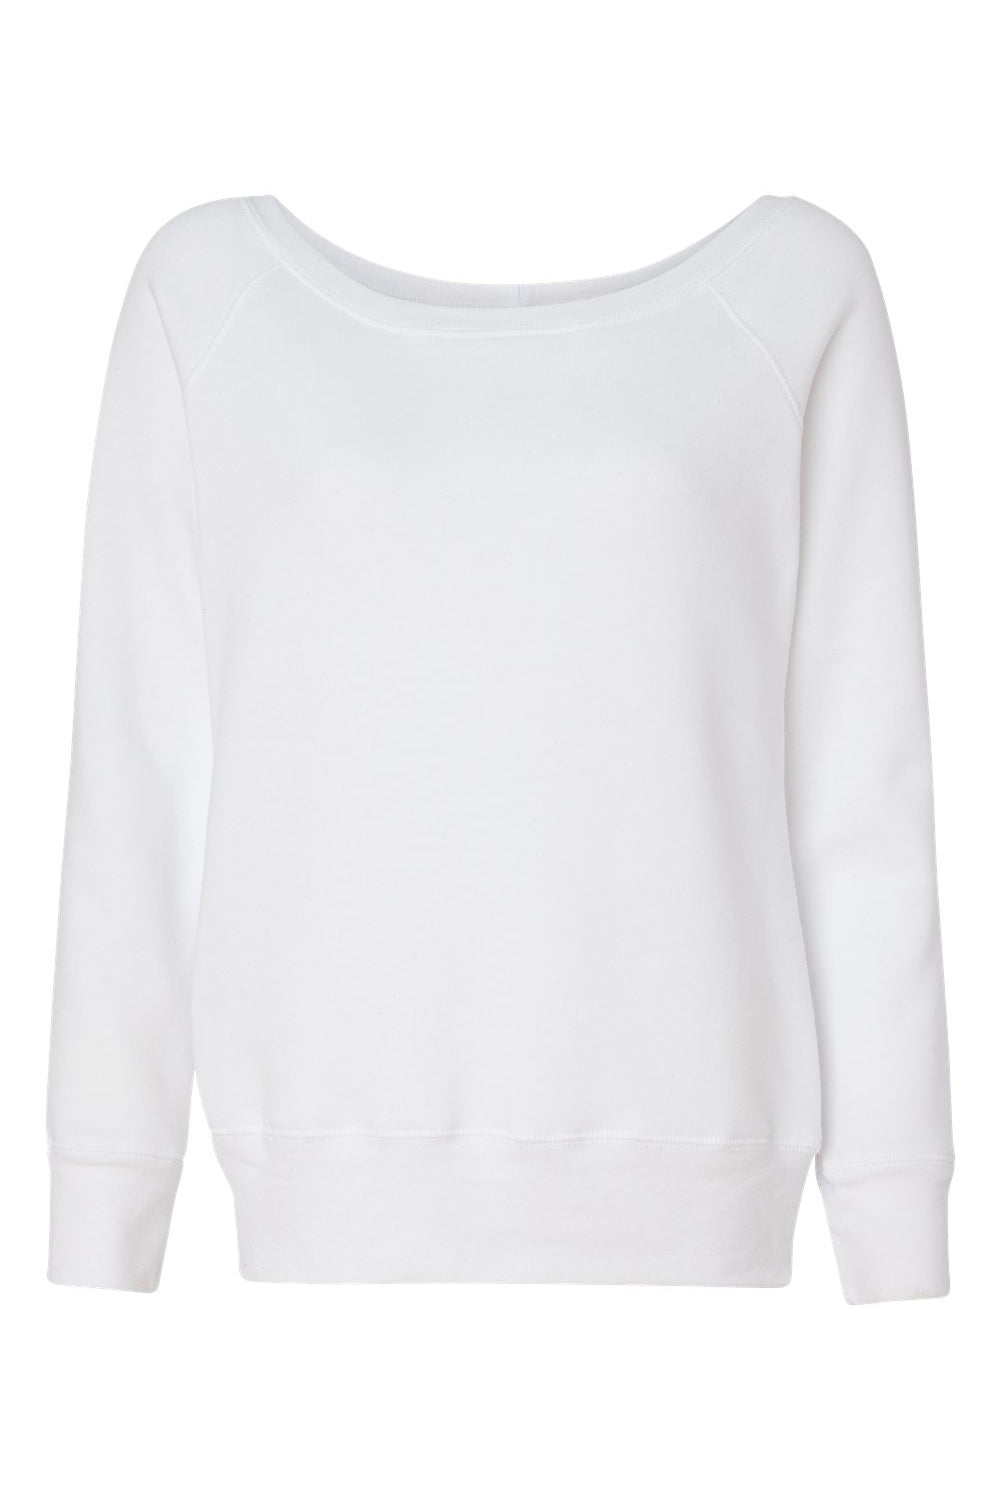 Bella + Canvas 7501 Womens Sponge Fleece Wide Neck Sweatshirt Solid White Flat Front